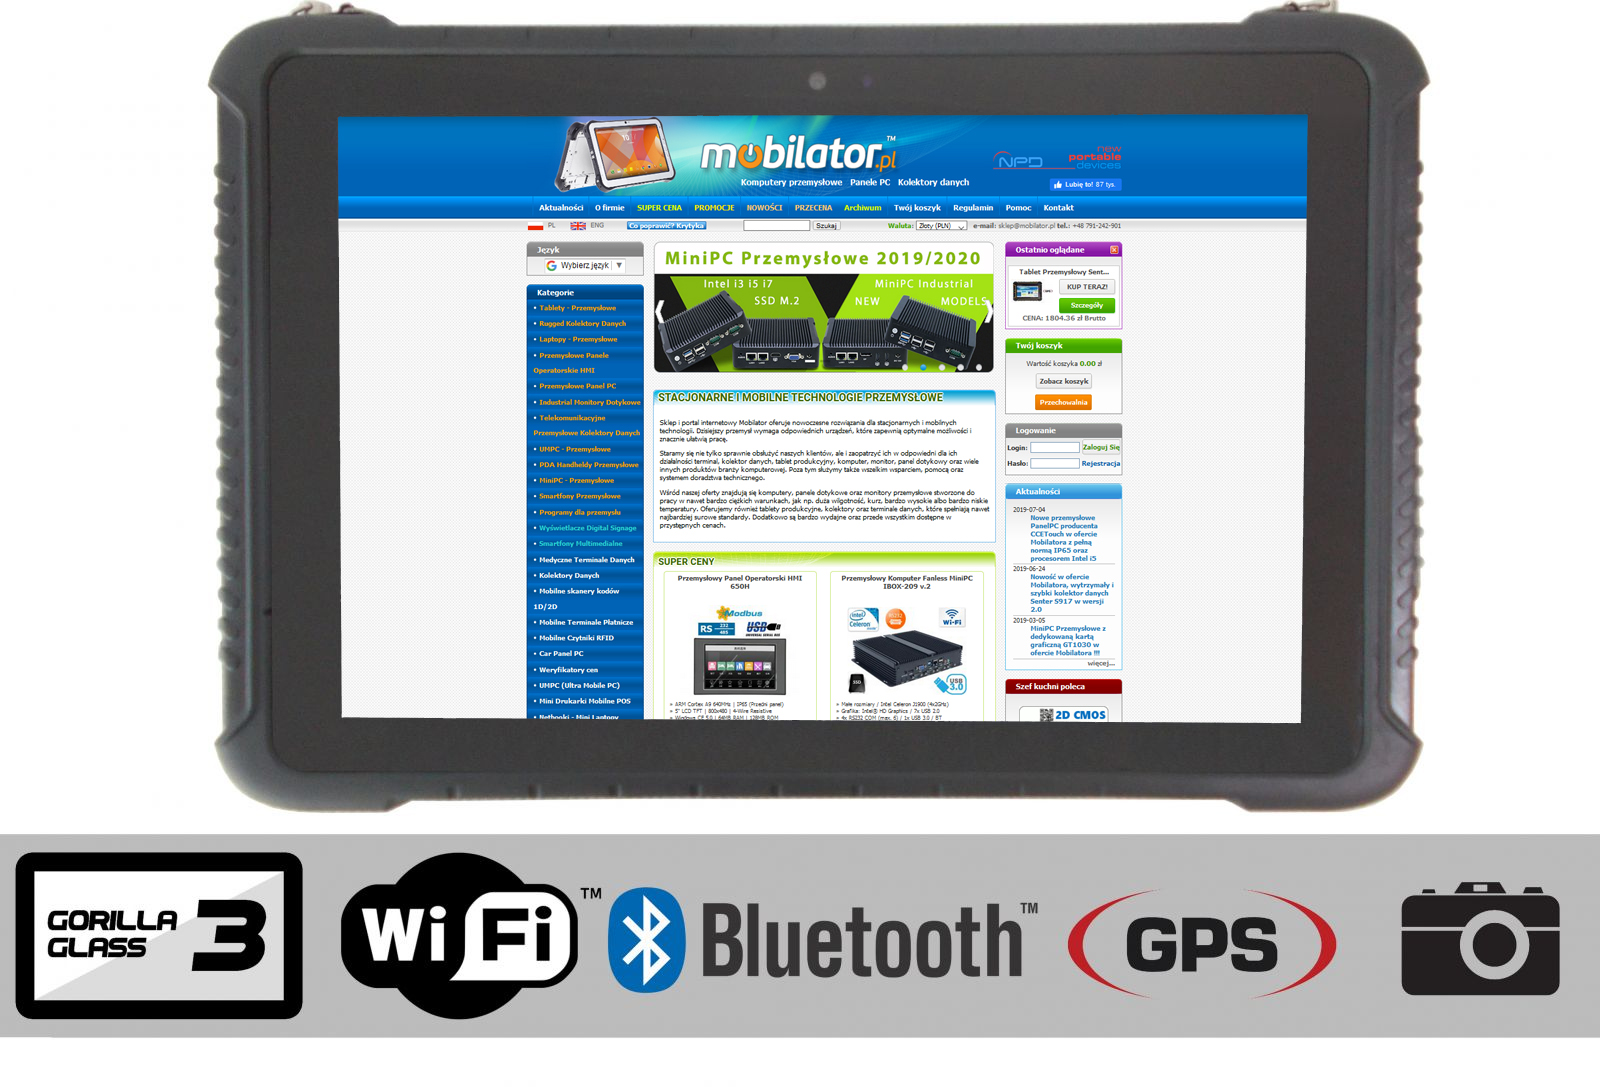 Windows 10 2GB RAM 32GB Flash EMMC Gorilla Glass 3 WiFi Bluetooth GPS Camera Emdoor I16H mobilator.pl mobilator.eu